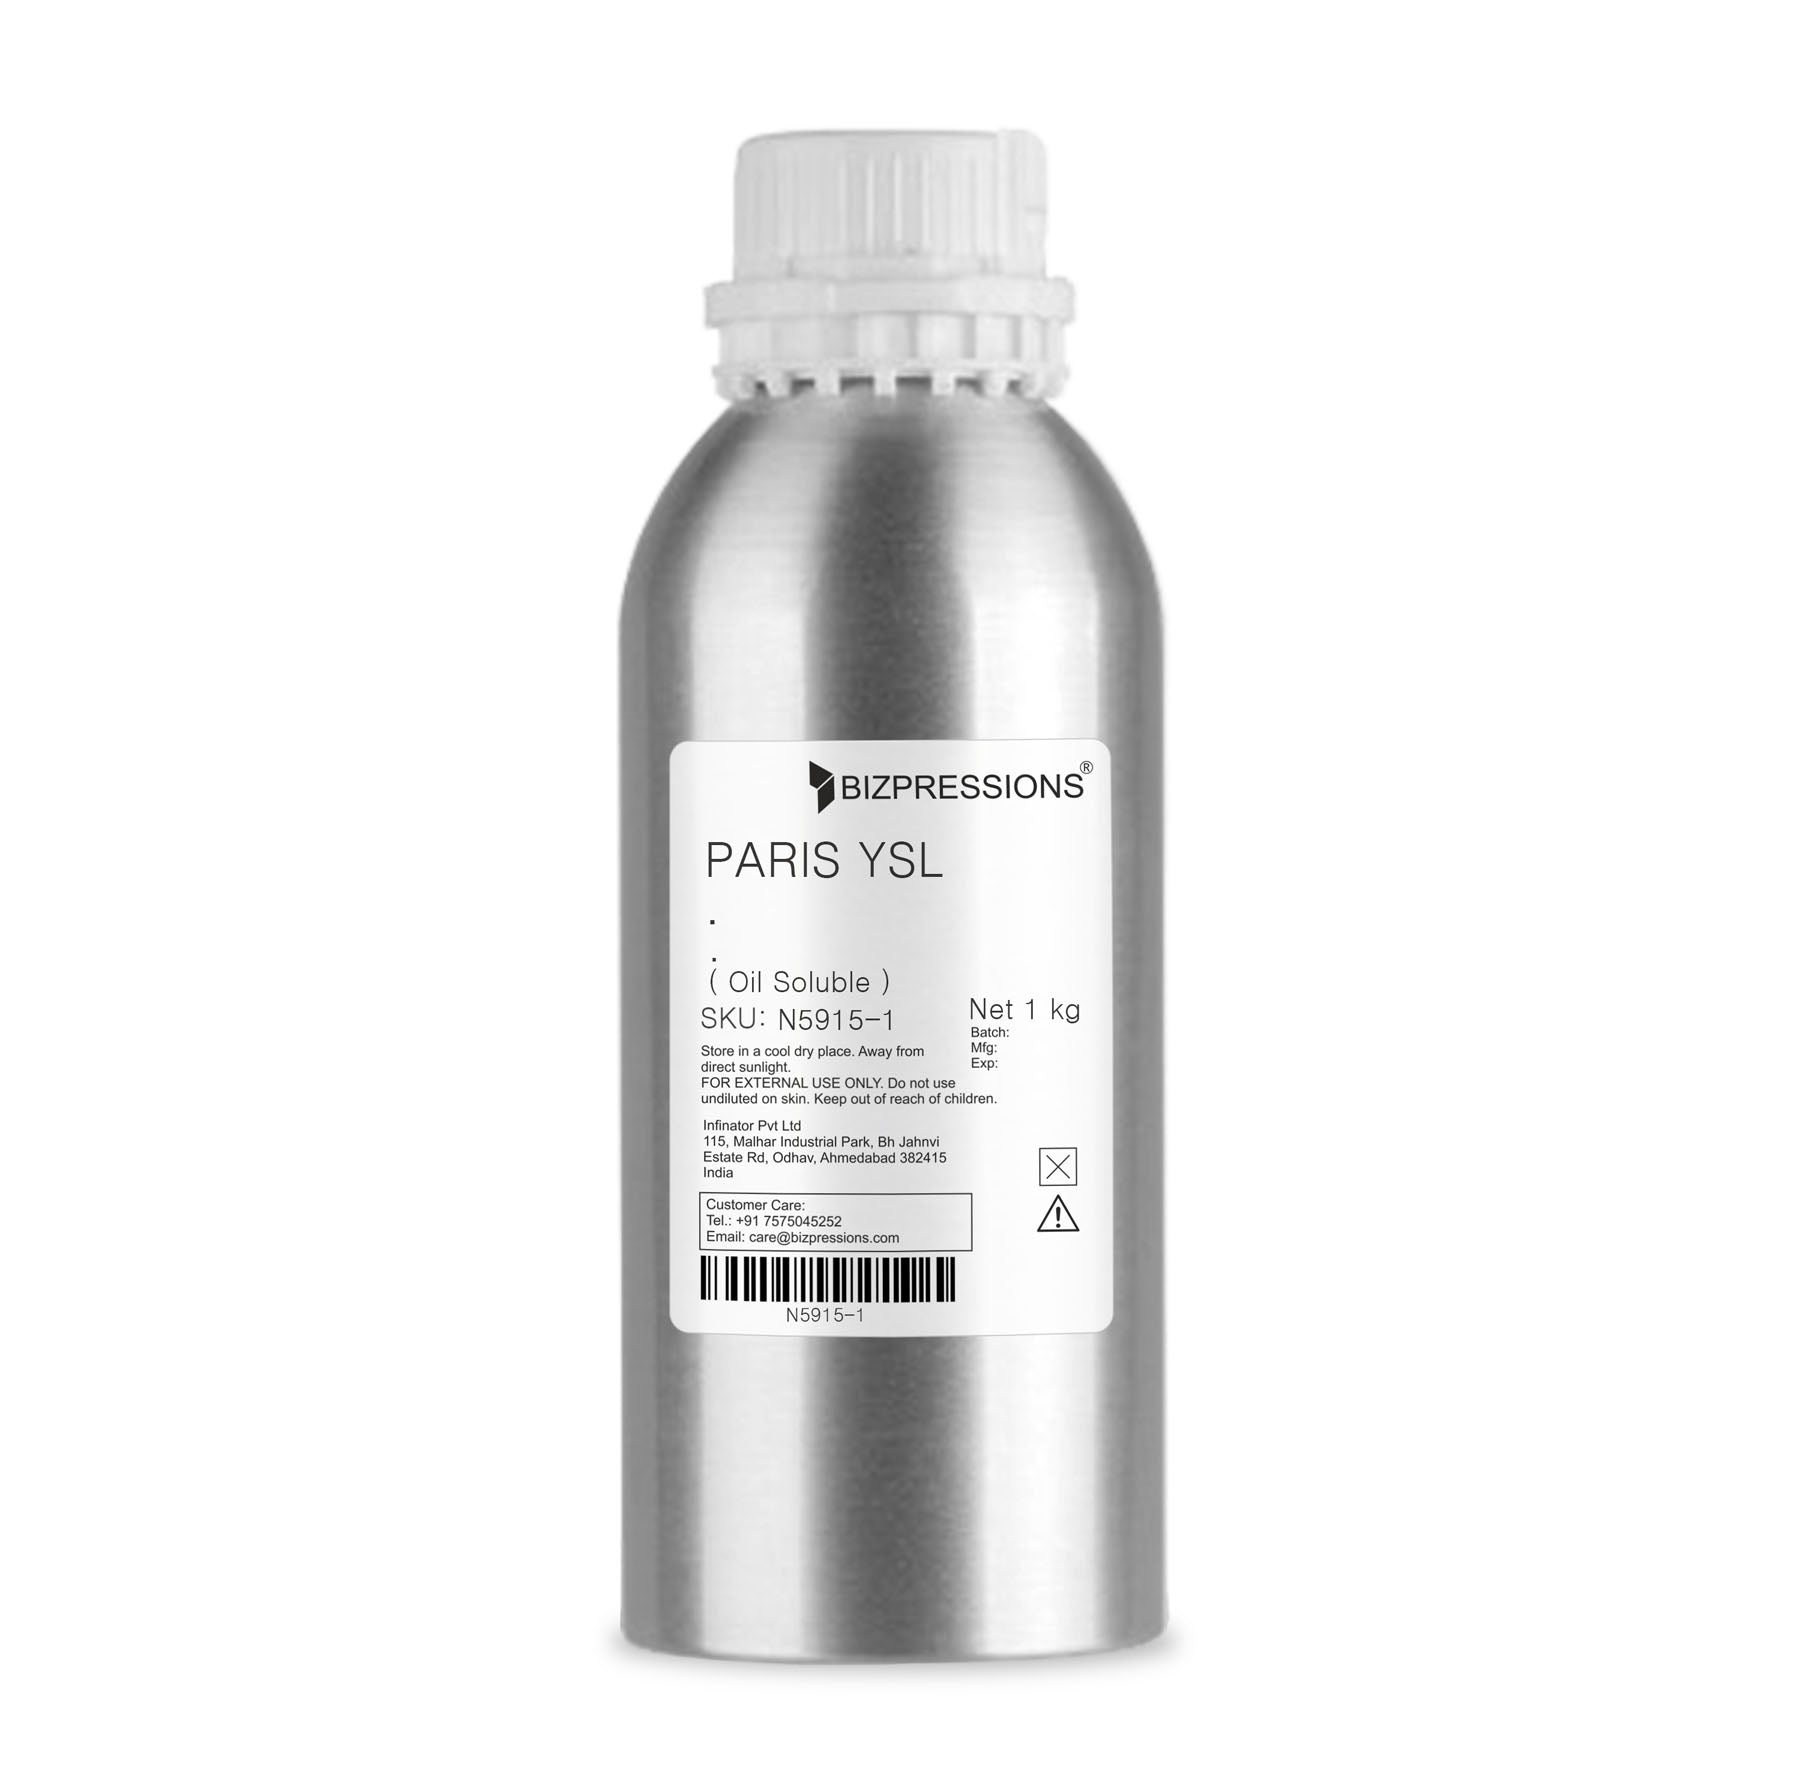 PARIS YSL - Fragrance ( Oil Soluble ) - 1 kg